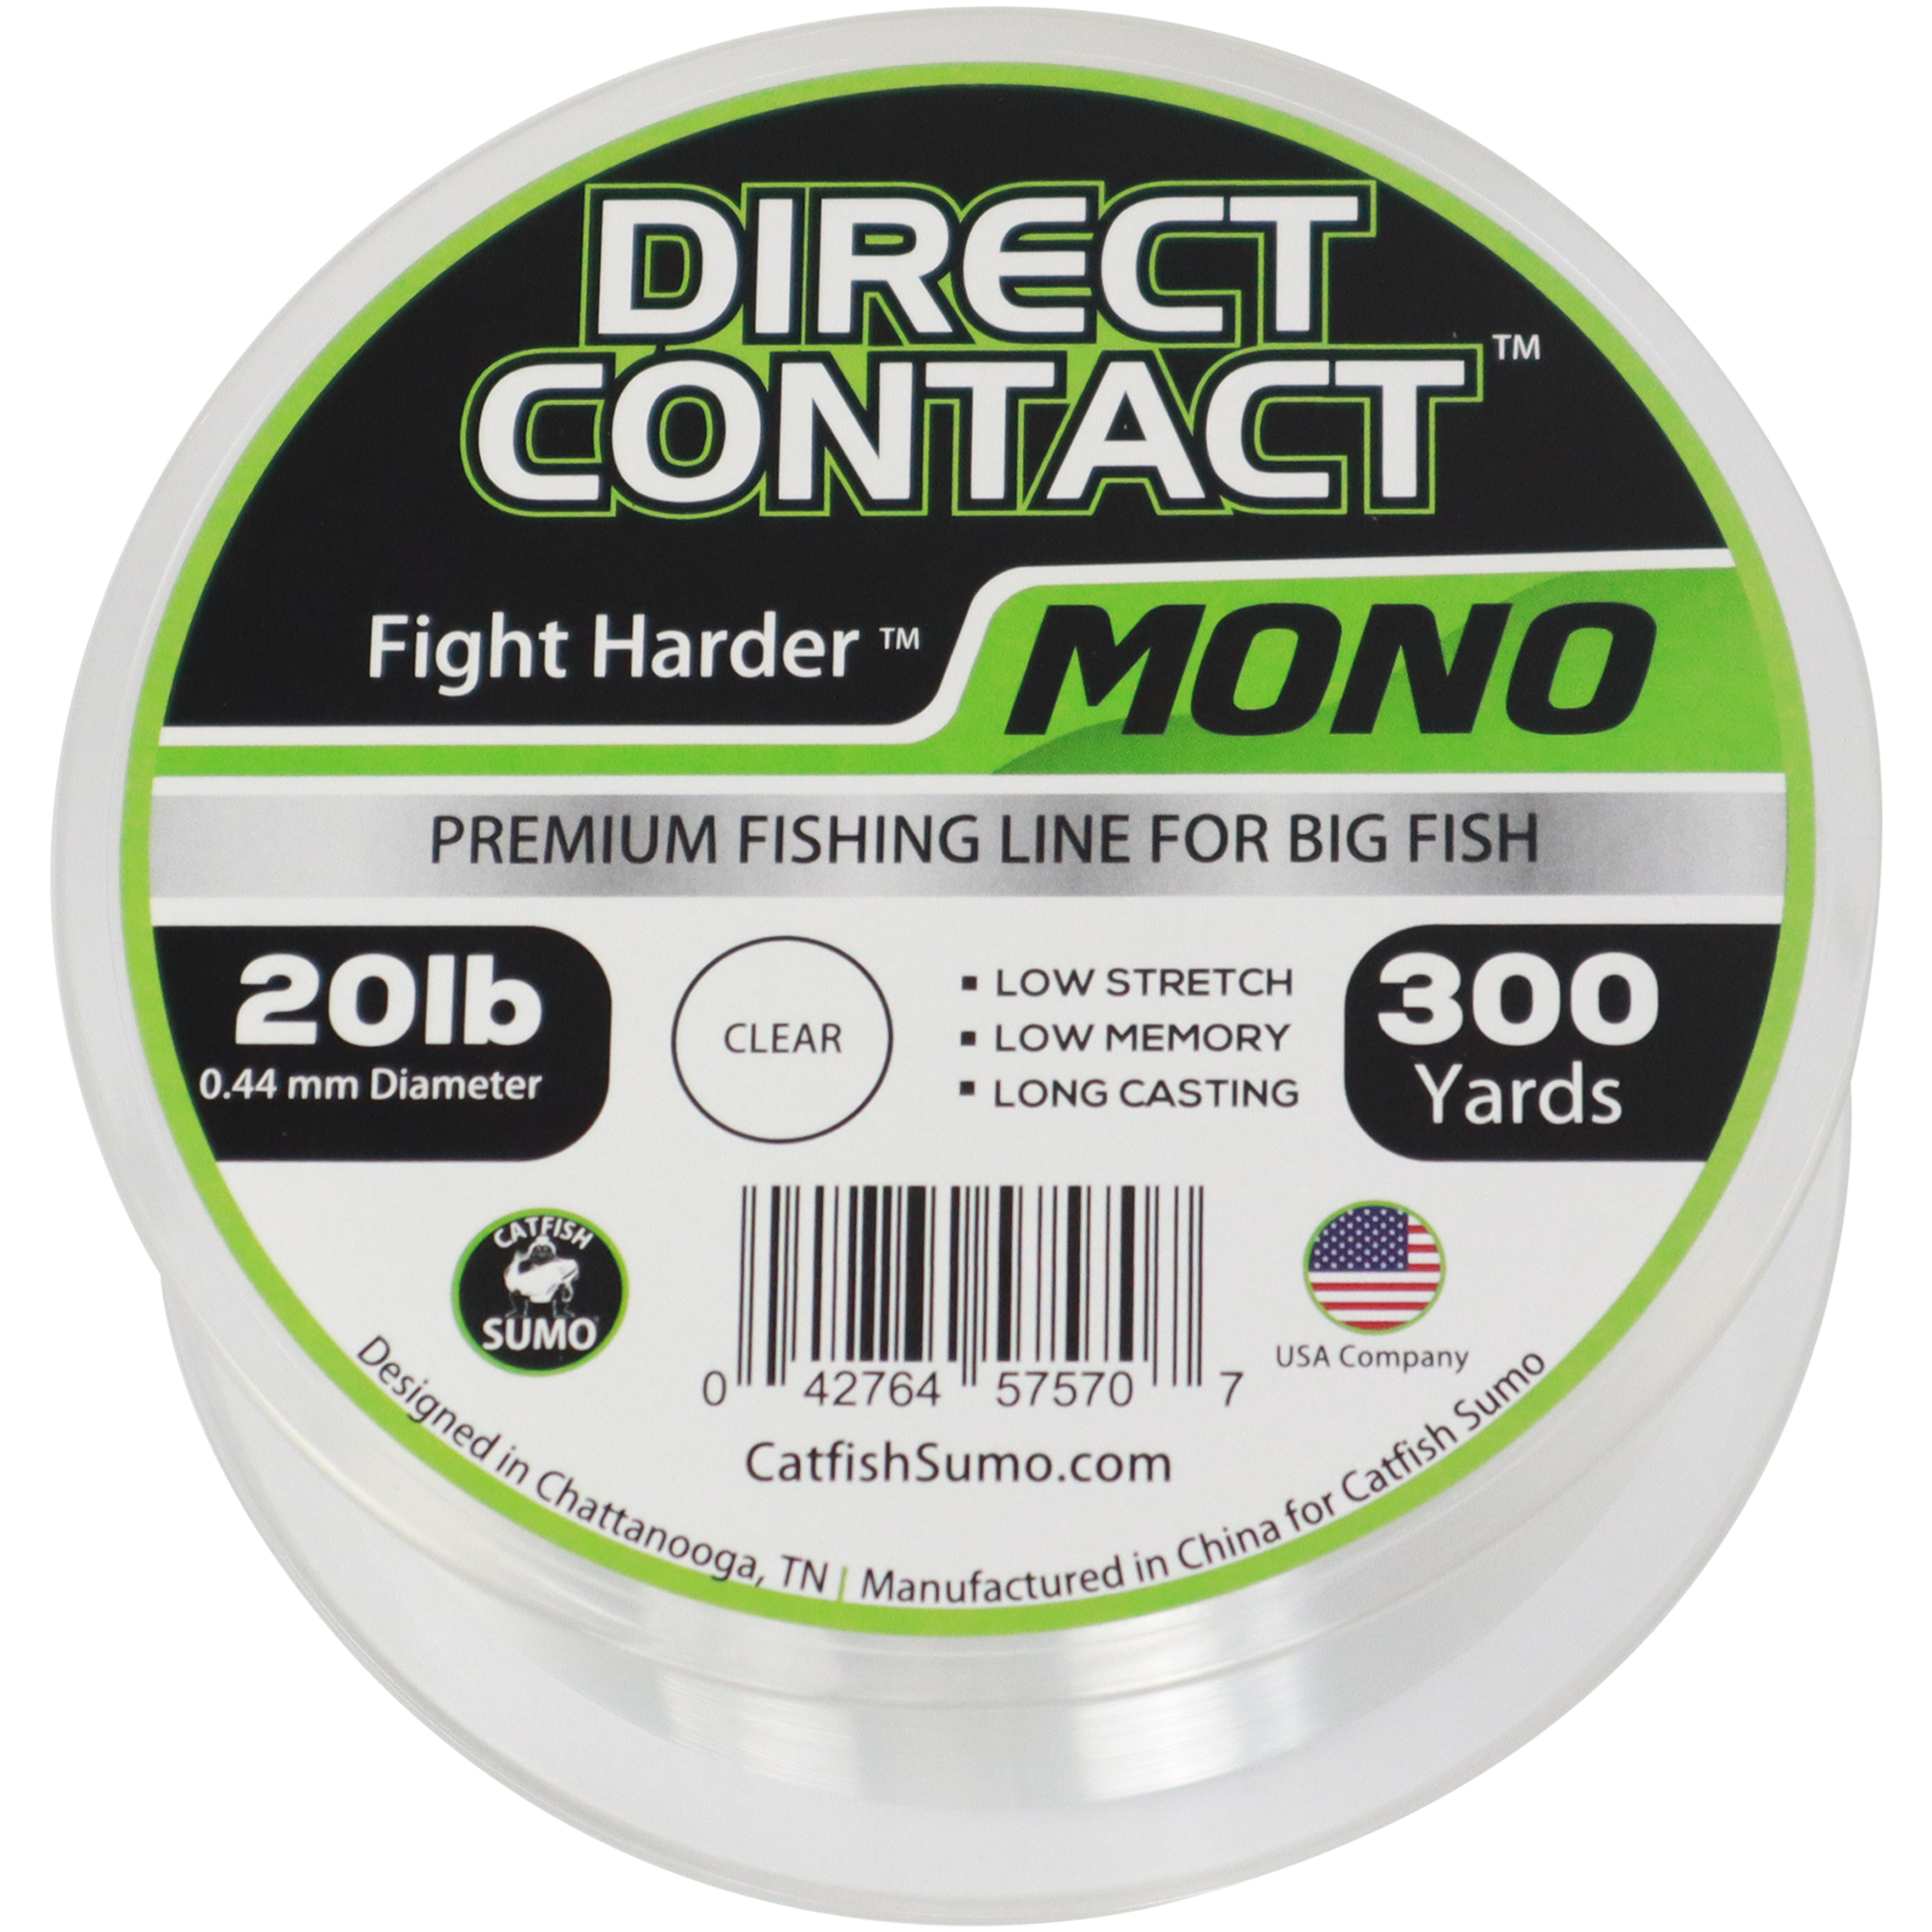 Direct Contact™ Premium Fishing Line for Big Fish, Mono, 300 Yard Spool